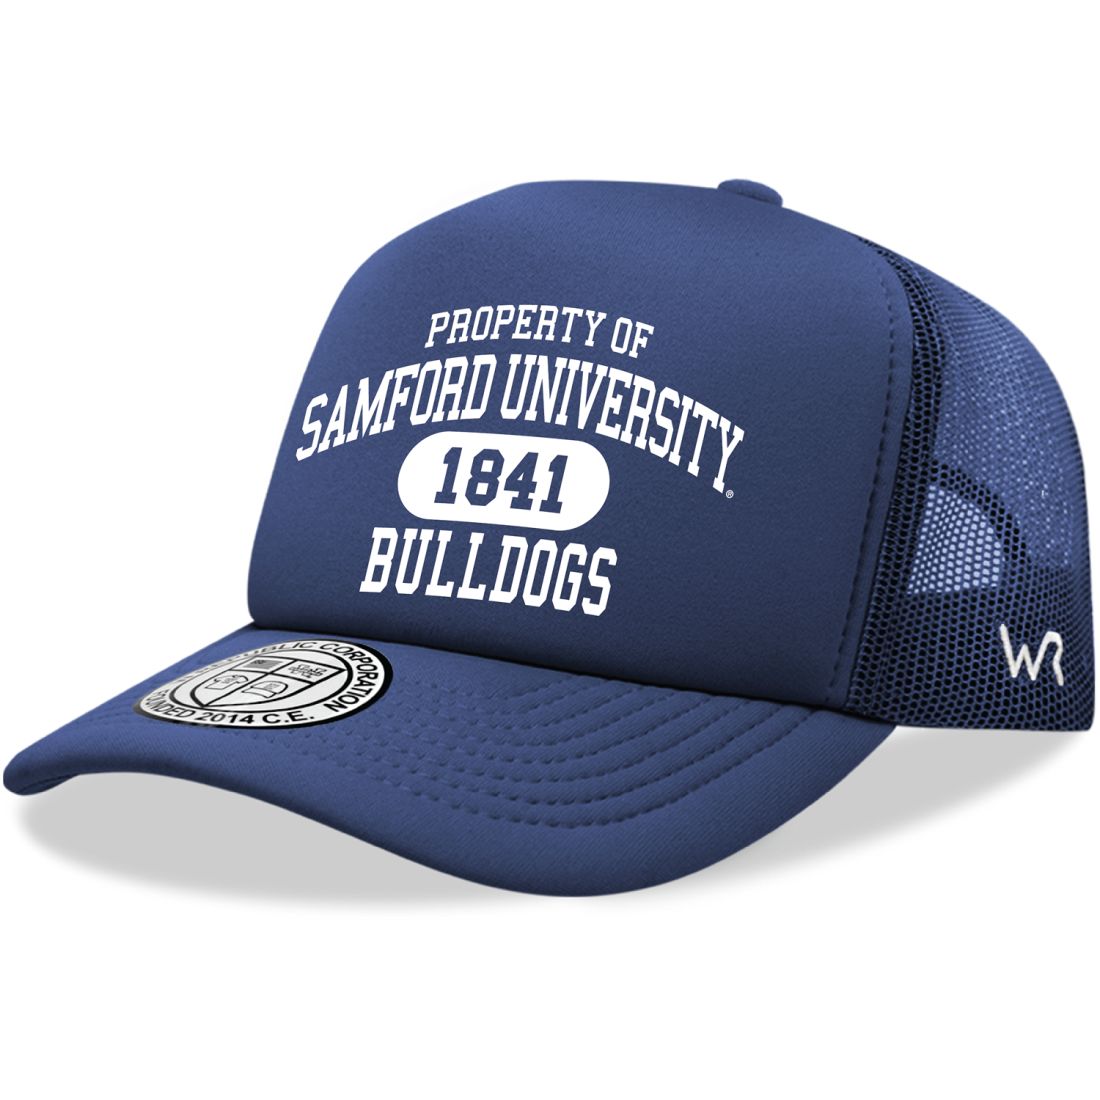 Samford University Bulldogs Property Foam Trucker Hats